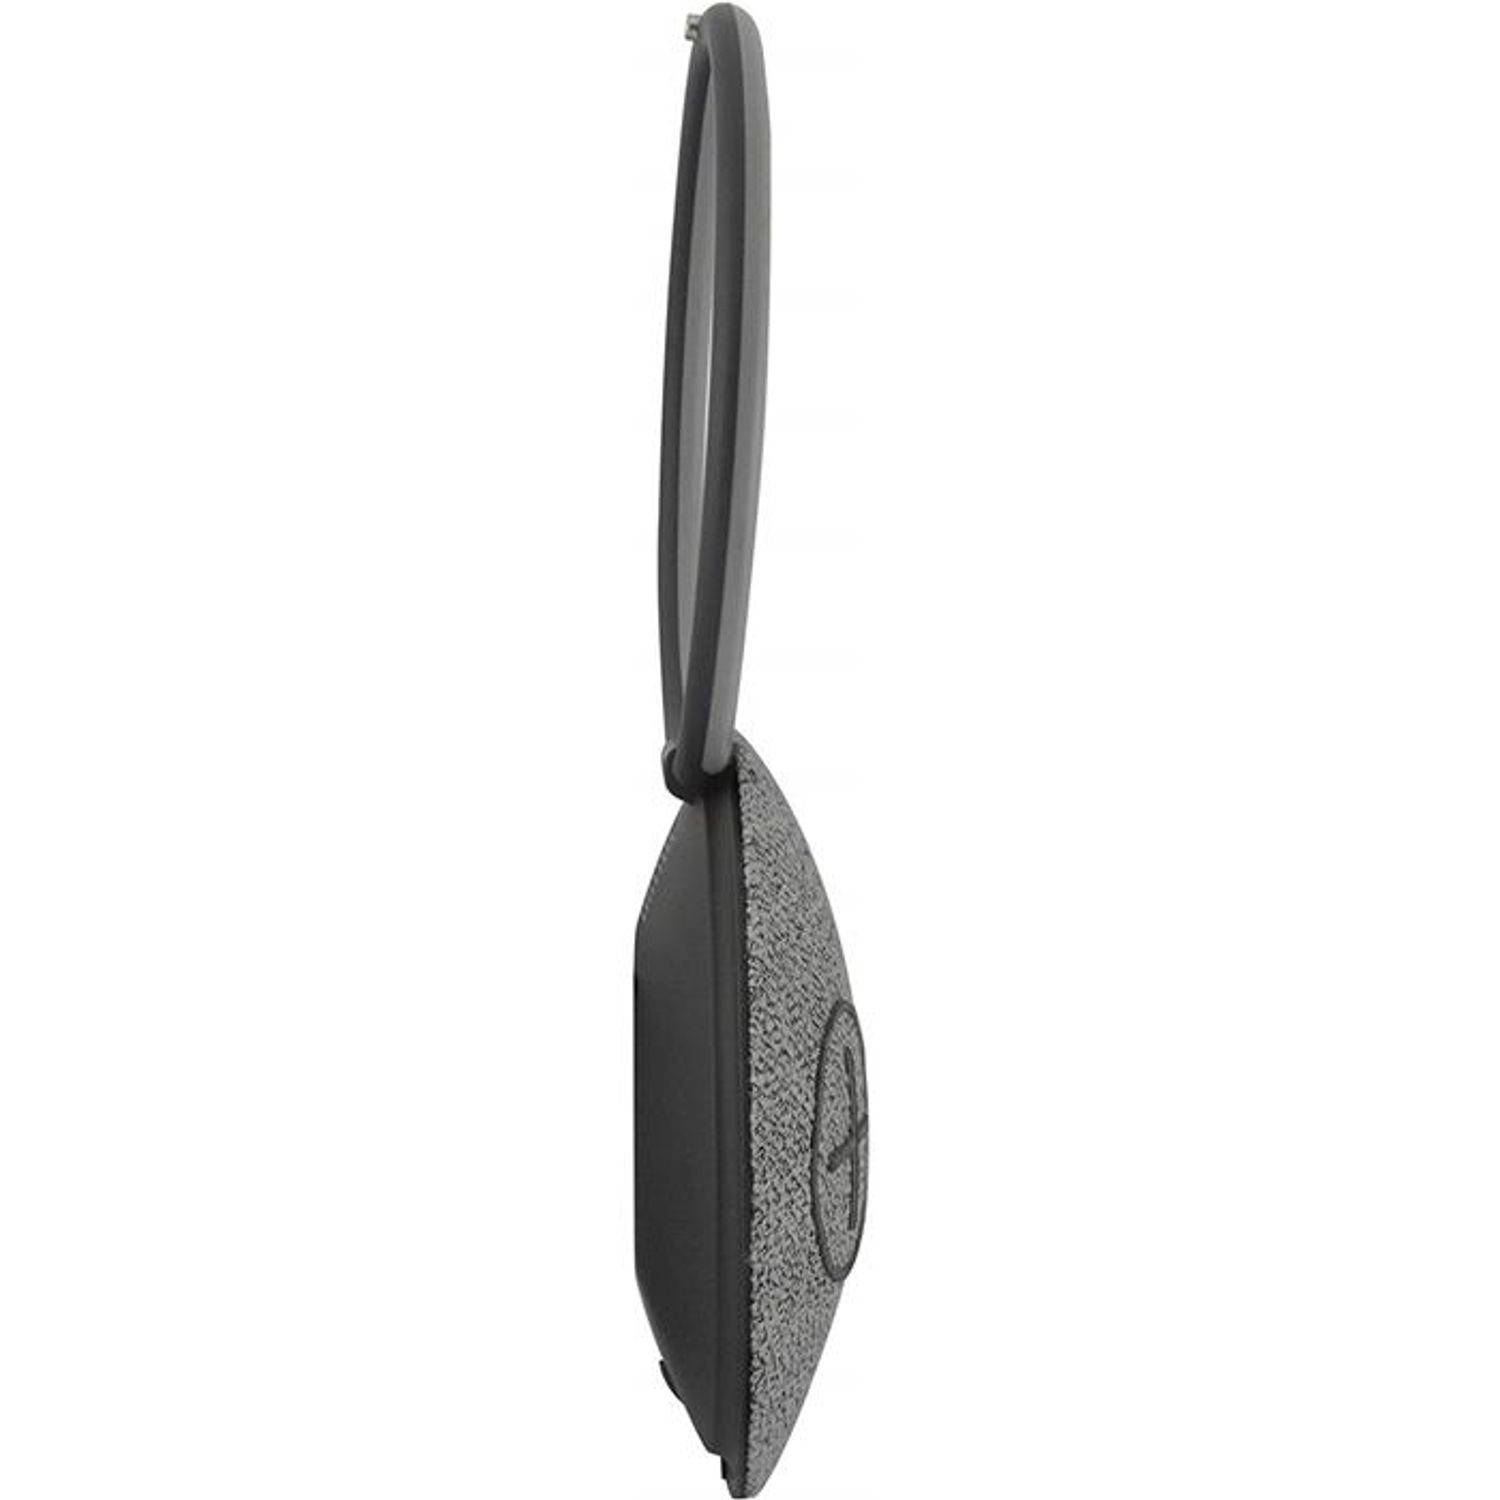 Bluetooth-Lautsprecher BAS dunkelgrau/schwarz TELESTAR by IMPERIAL 3 Bluetoothlautsprecher